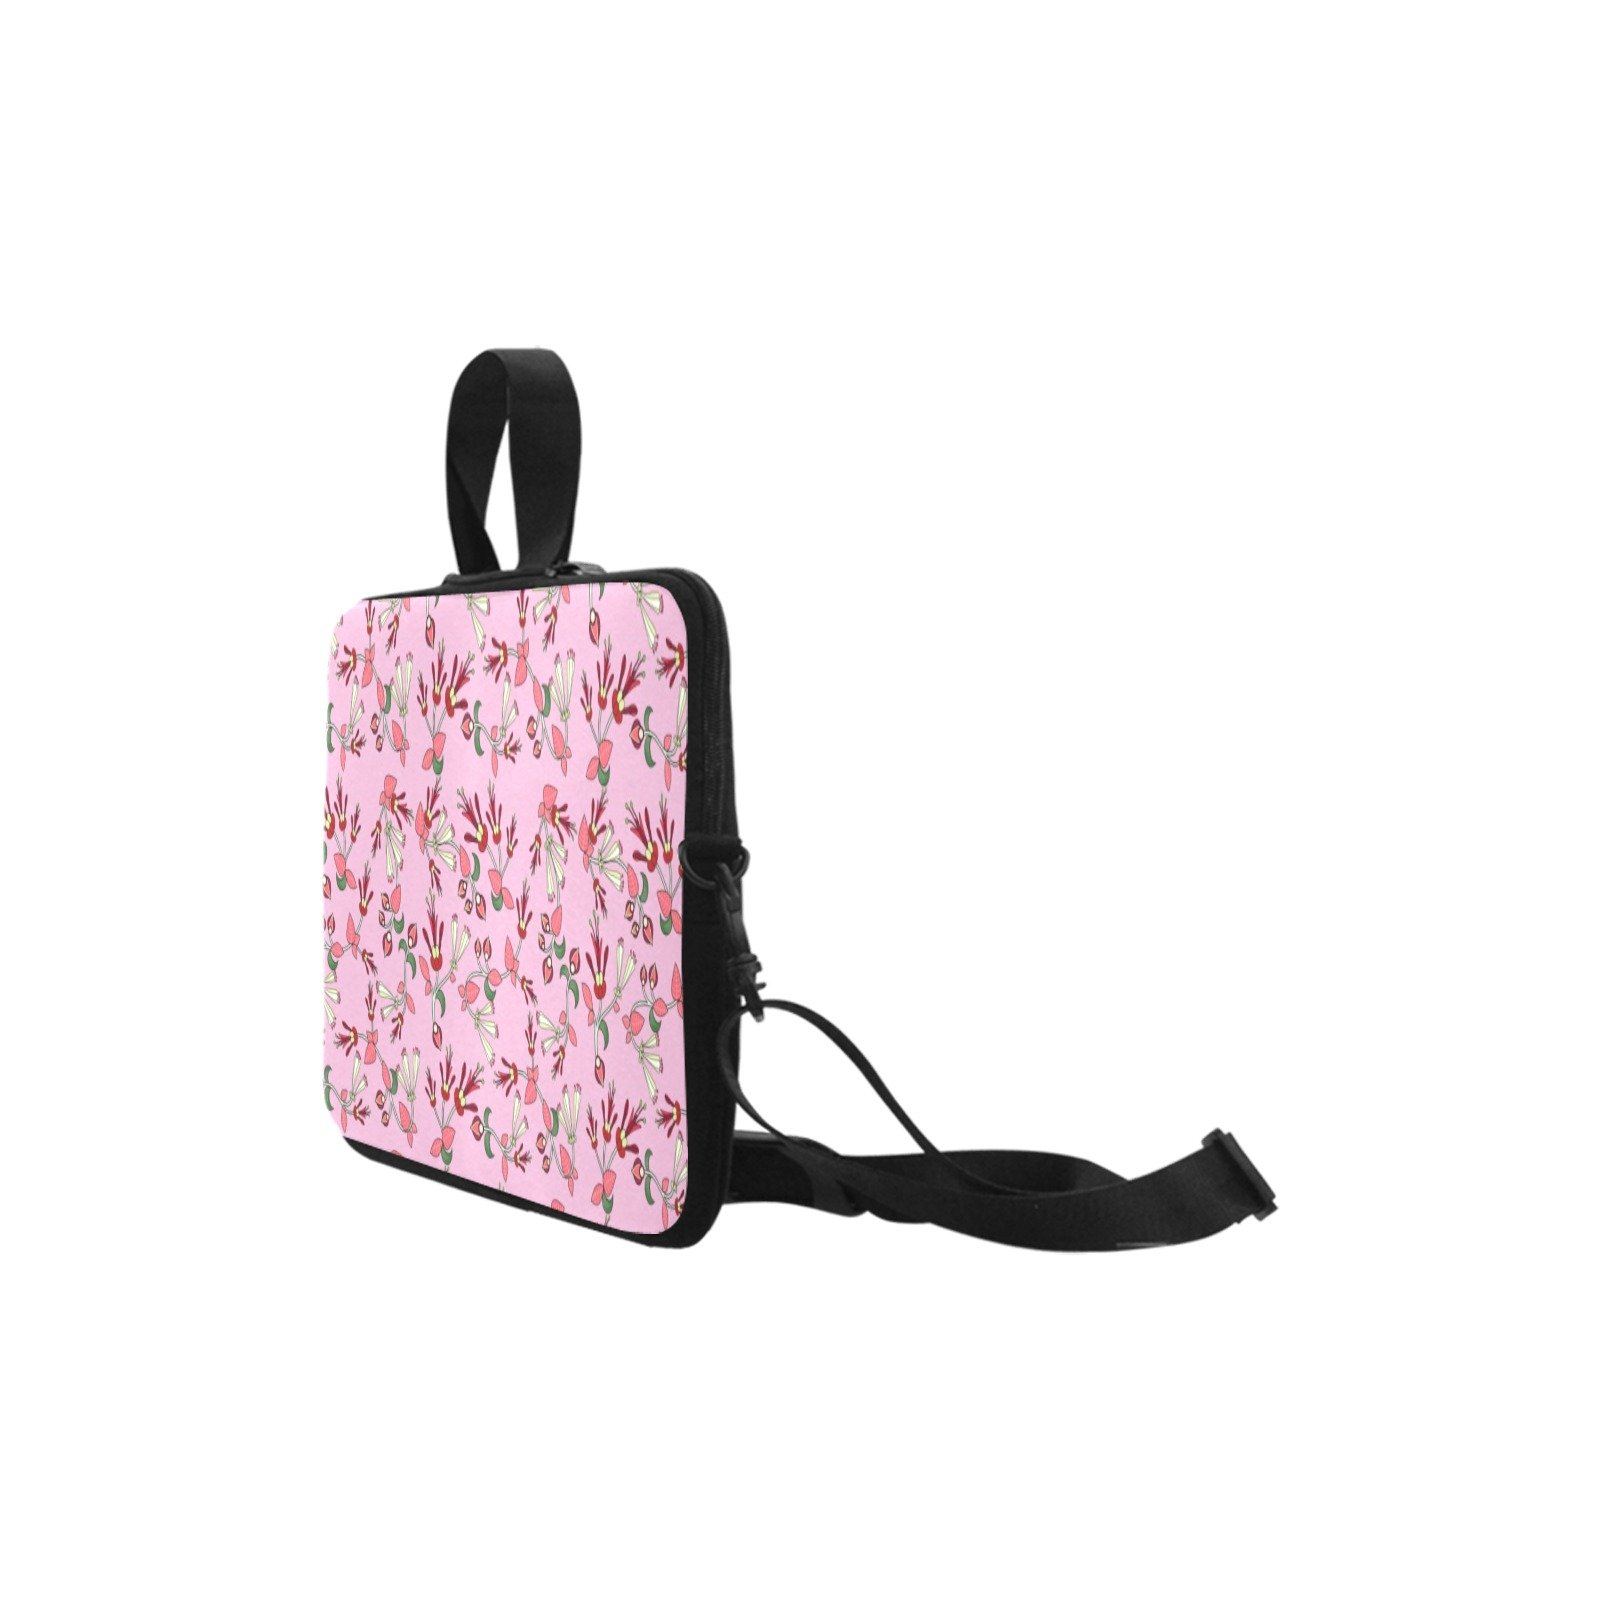 Strawberry Floral Laptop Handbags 13" Laptop Handbags 13" e-joyer 